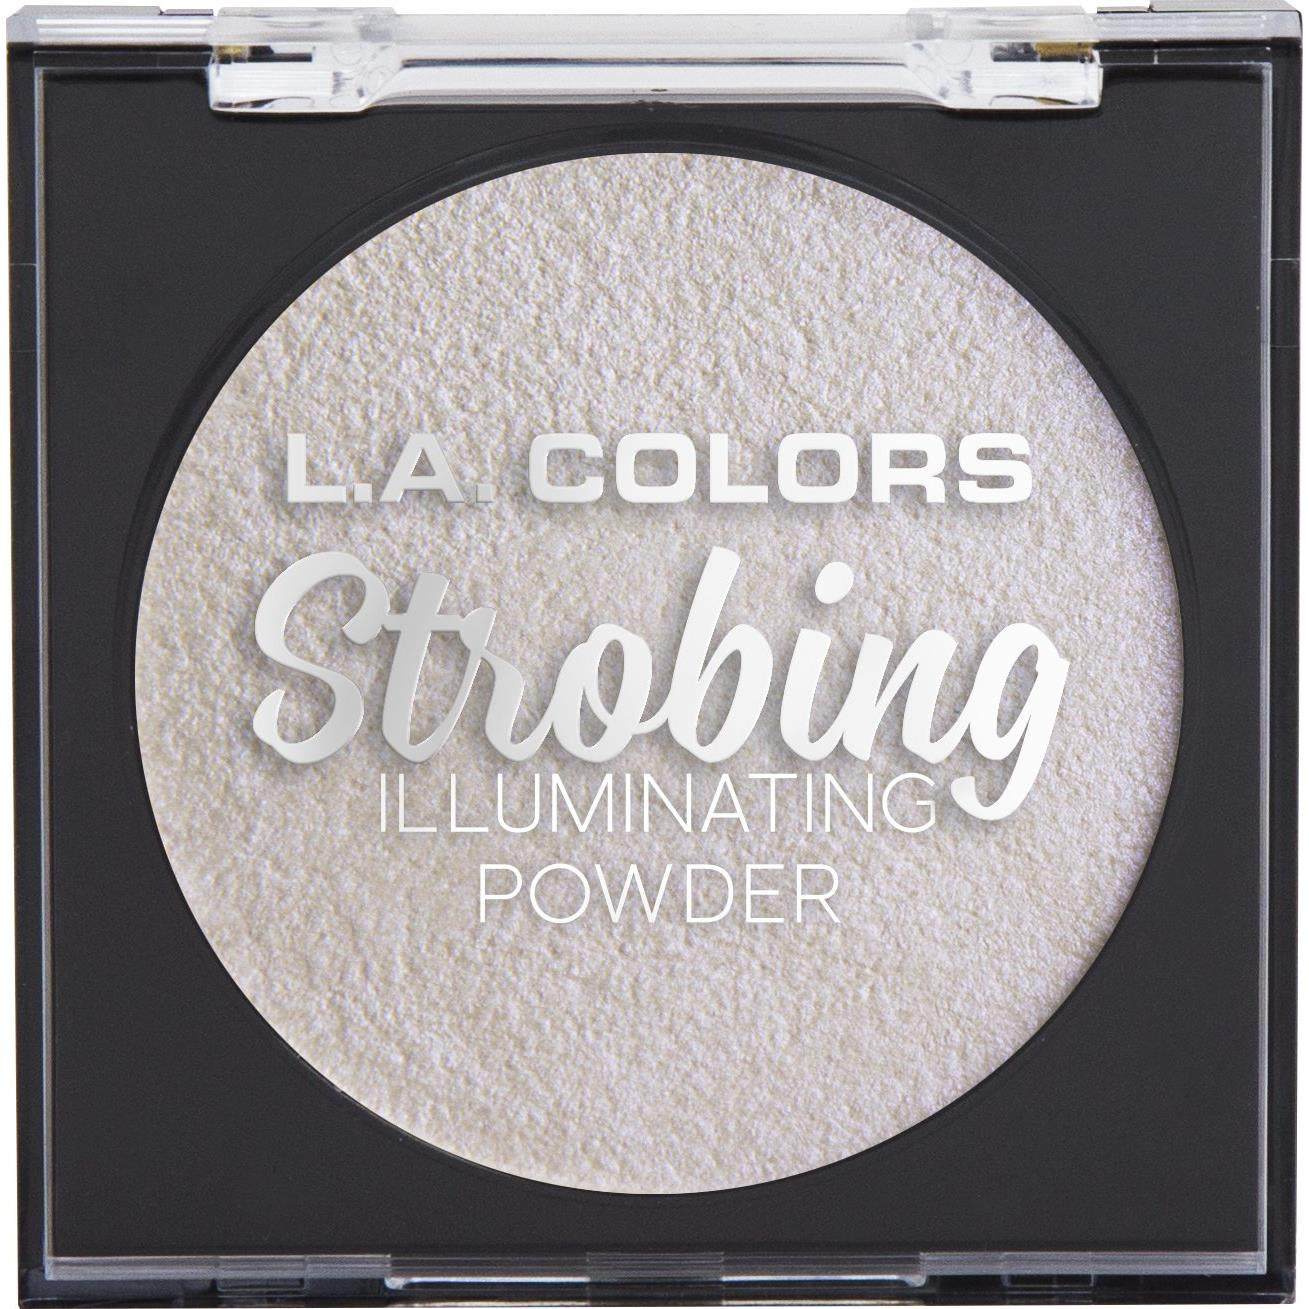 L.A. COLORS Strobing Illuminating Powder, Iridescent Pearl, 1 Ounce